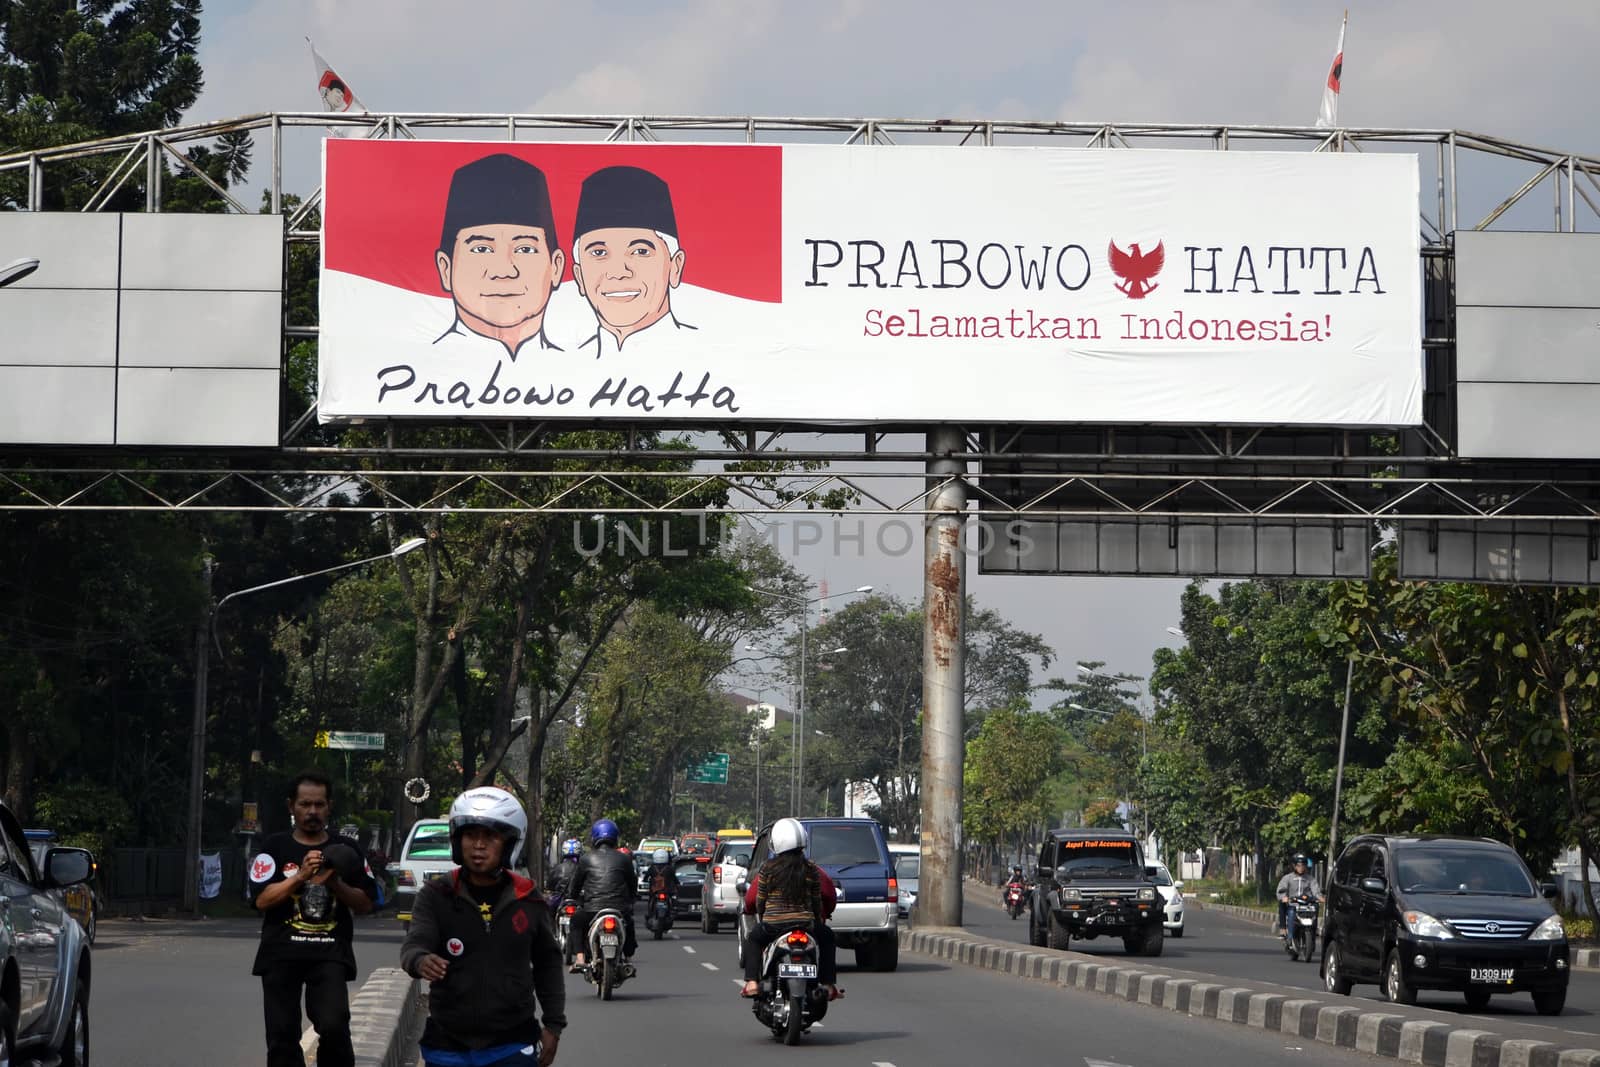 bandung, indonesia-july 3, 2014: prabowo hatta rajasa political billboard shown for indonesian election 2014.